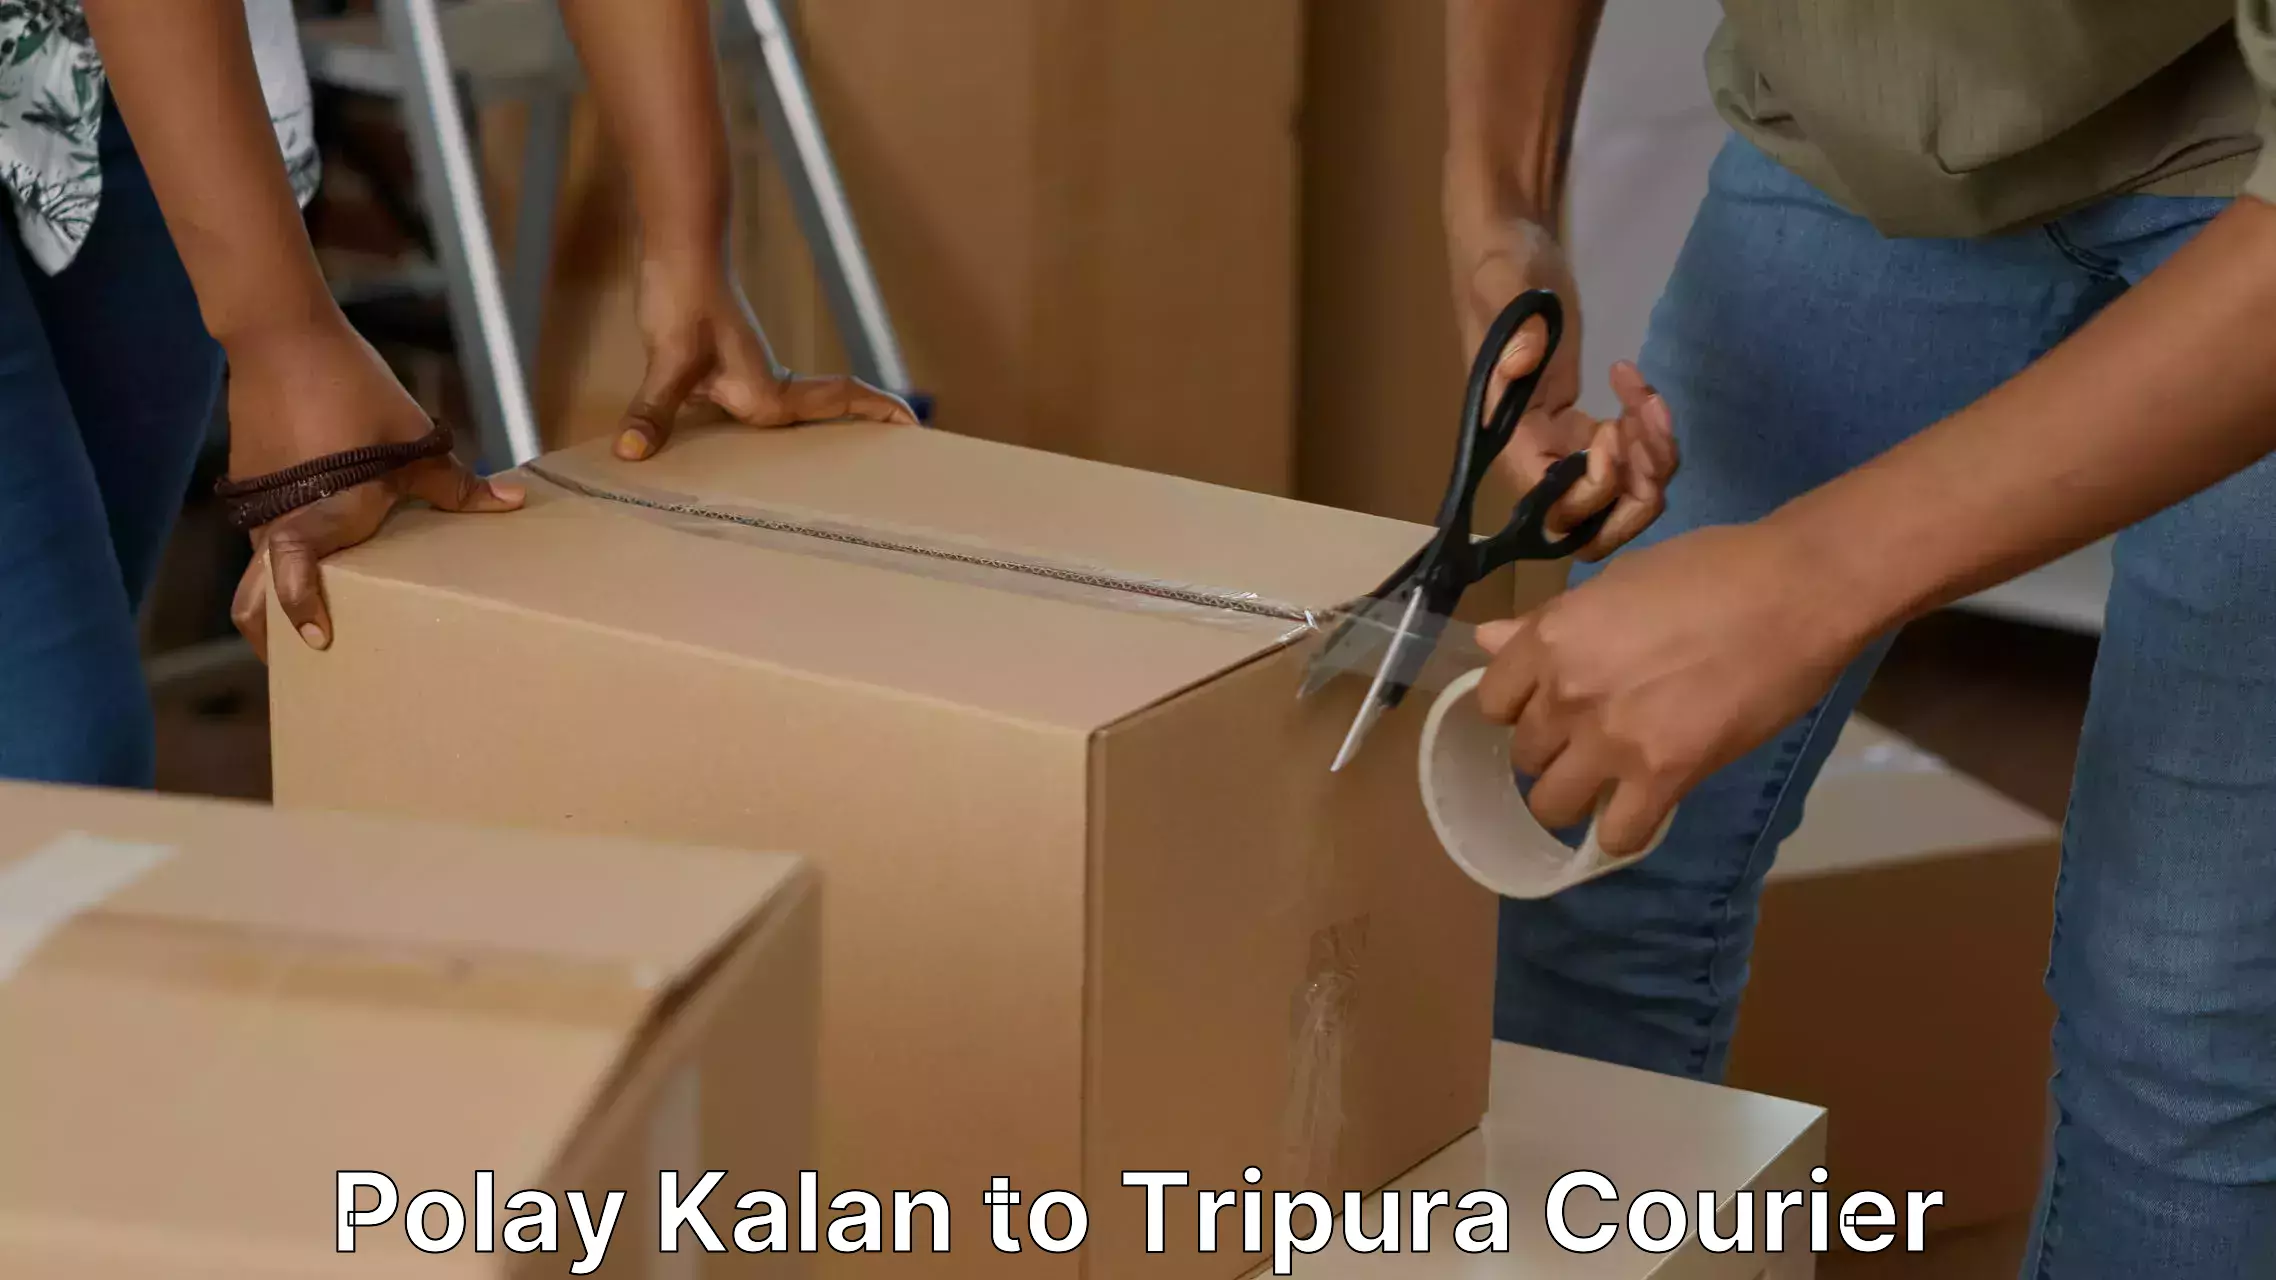 Skilled household transport Polay Kalan to South Tripura